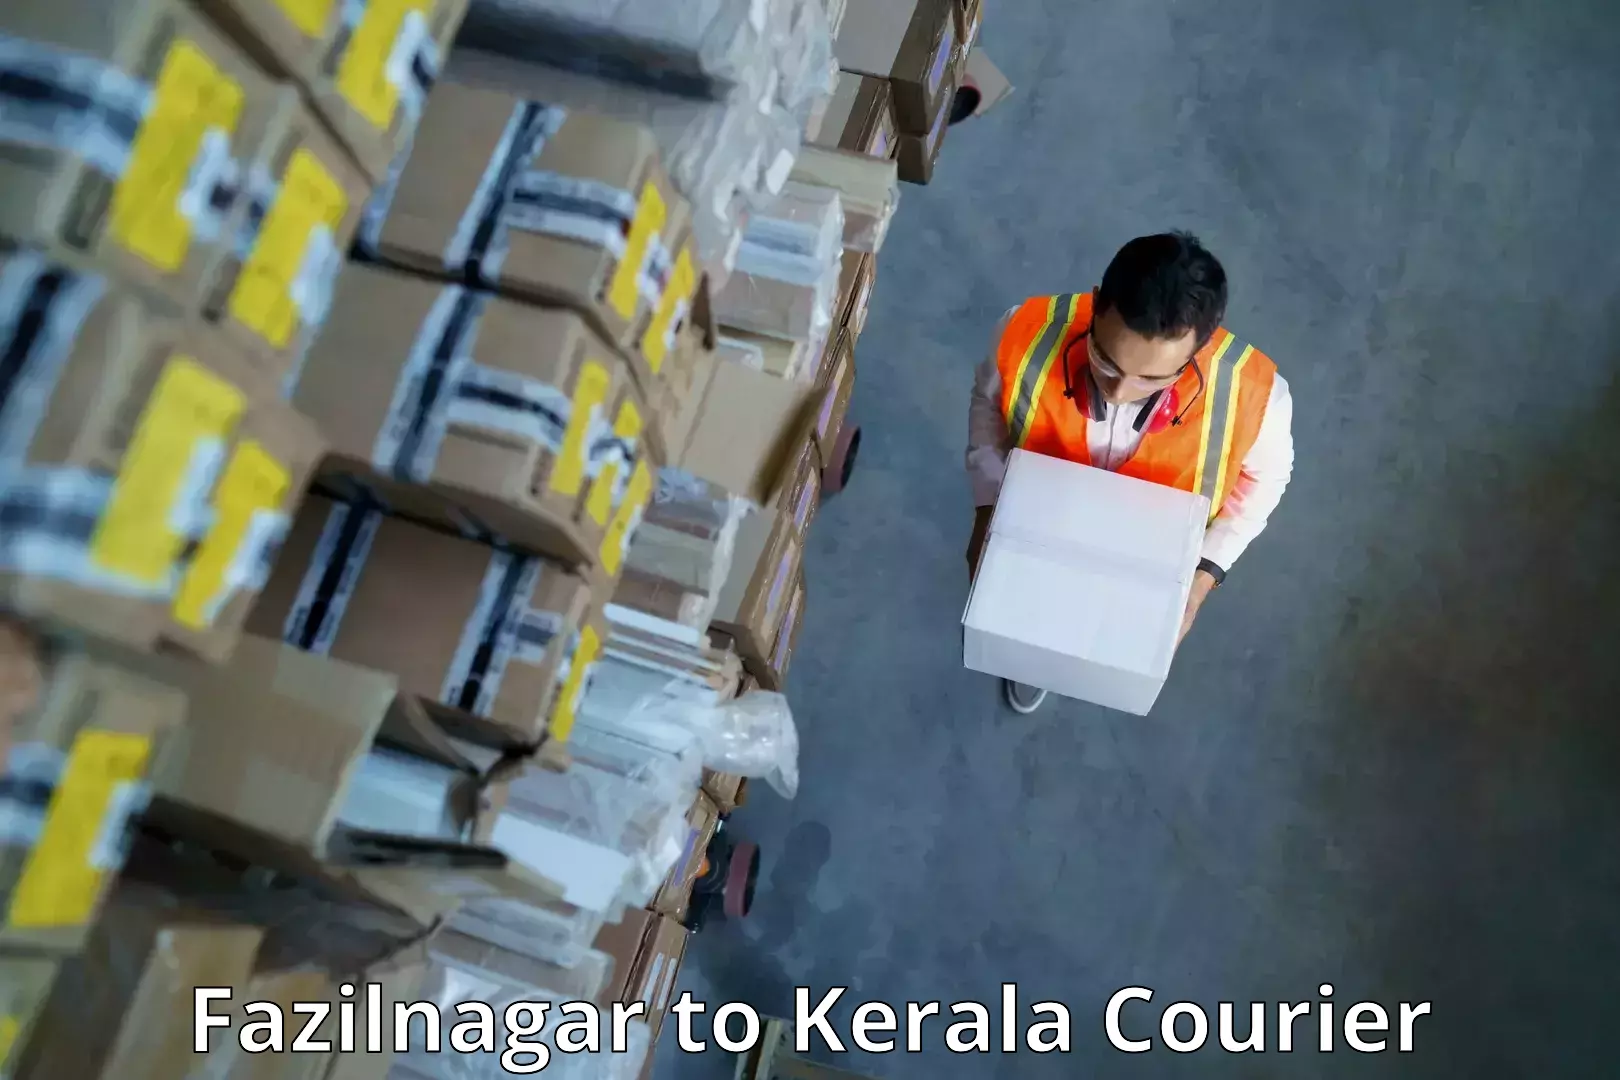 Flexible delivery schedules Fazilnagar to Kottayam